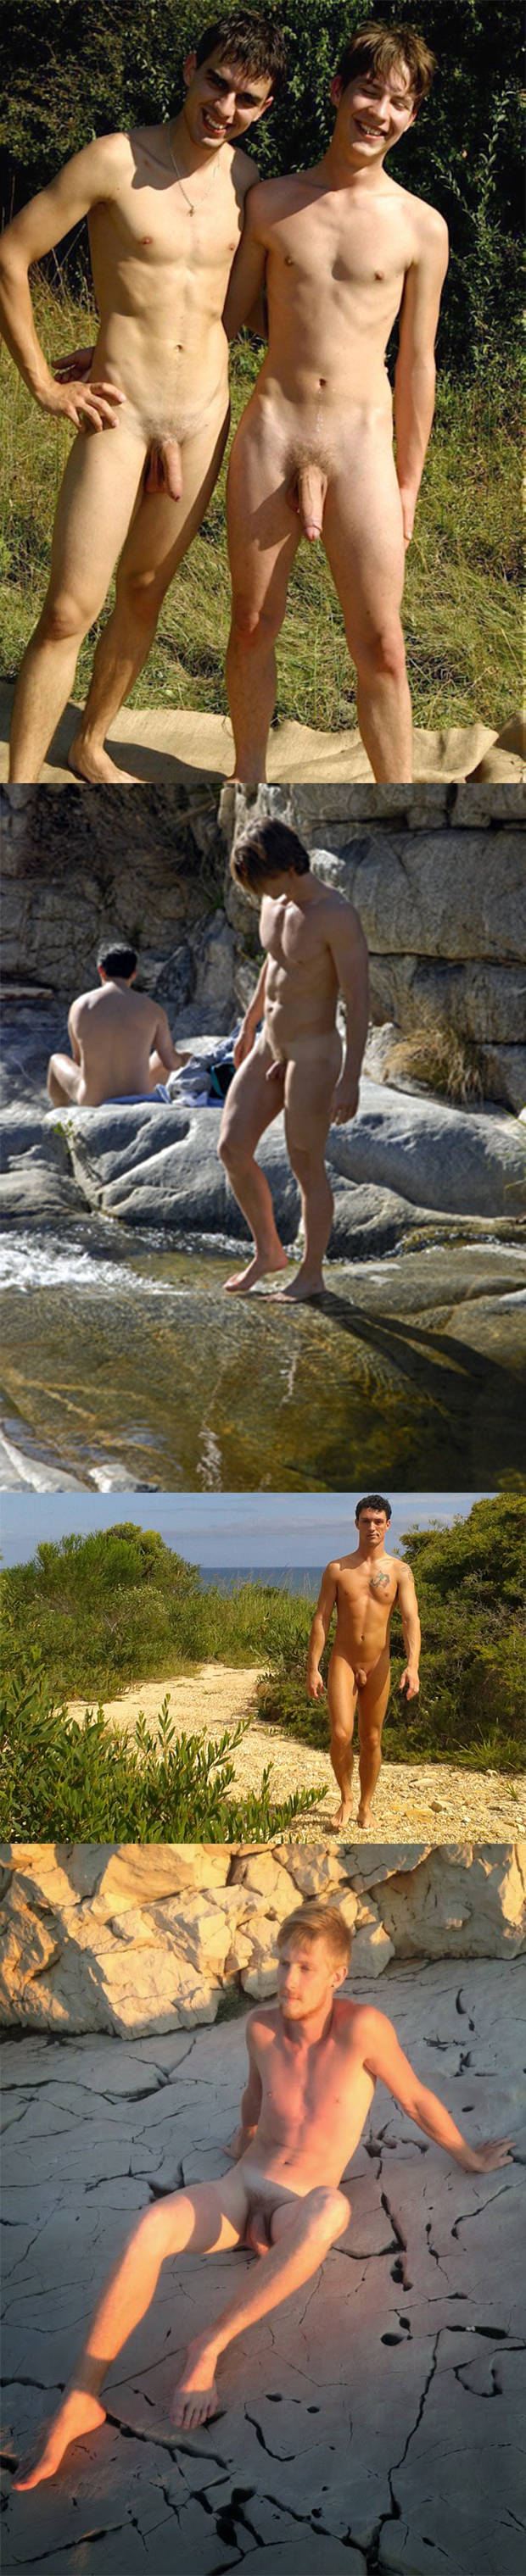 spycam nudist guys cock out beach